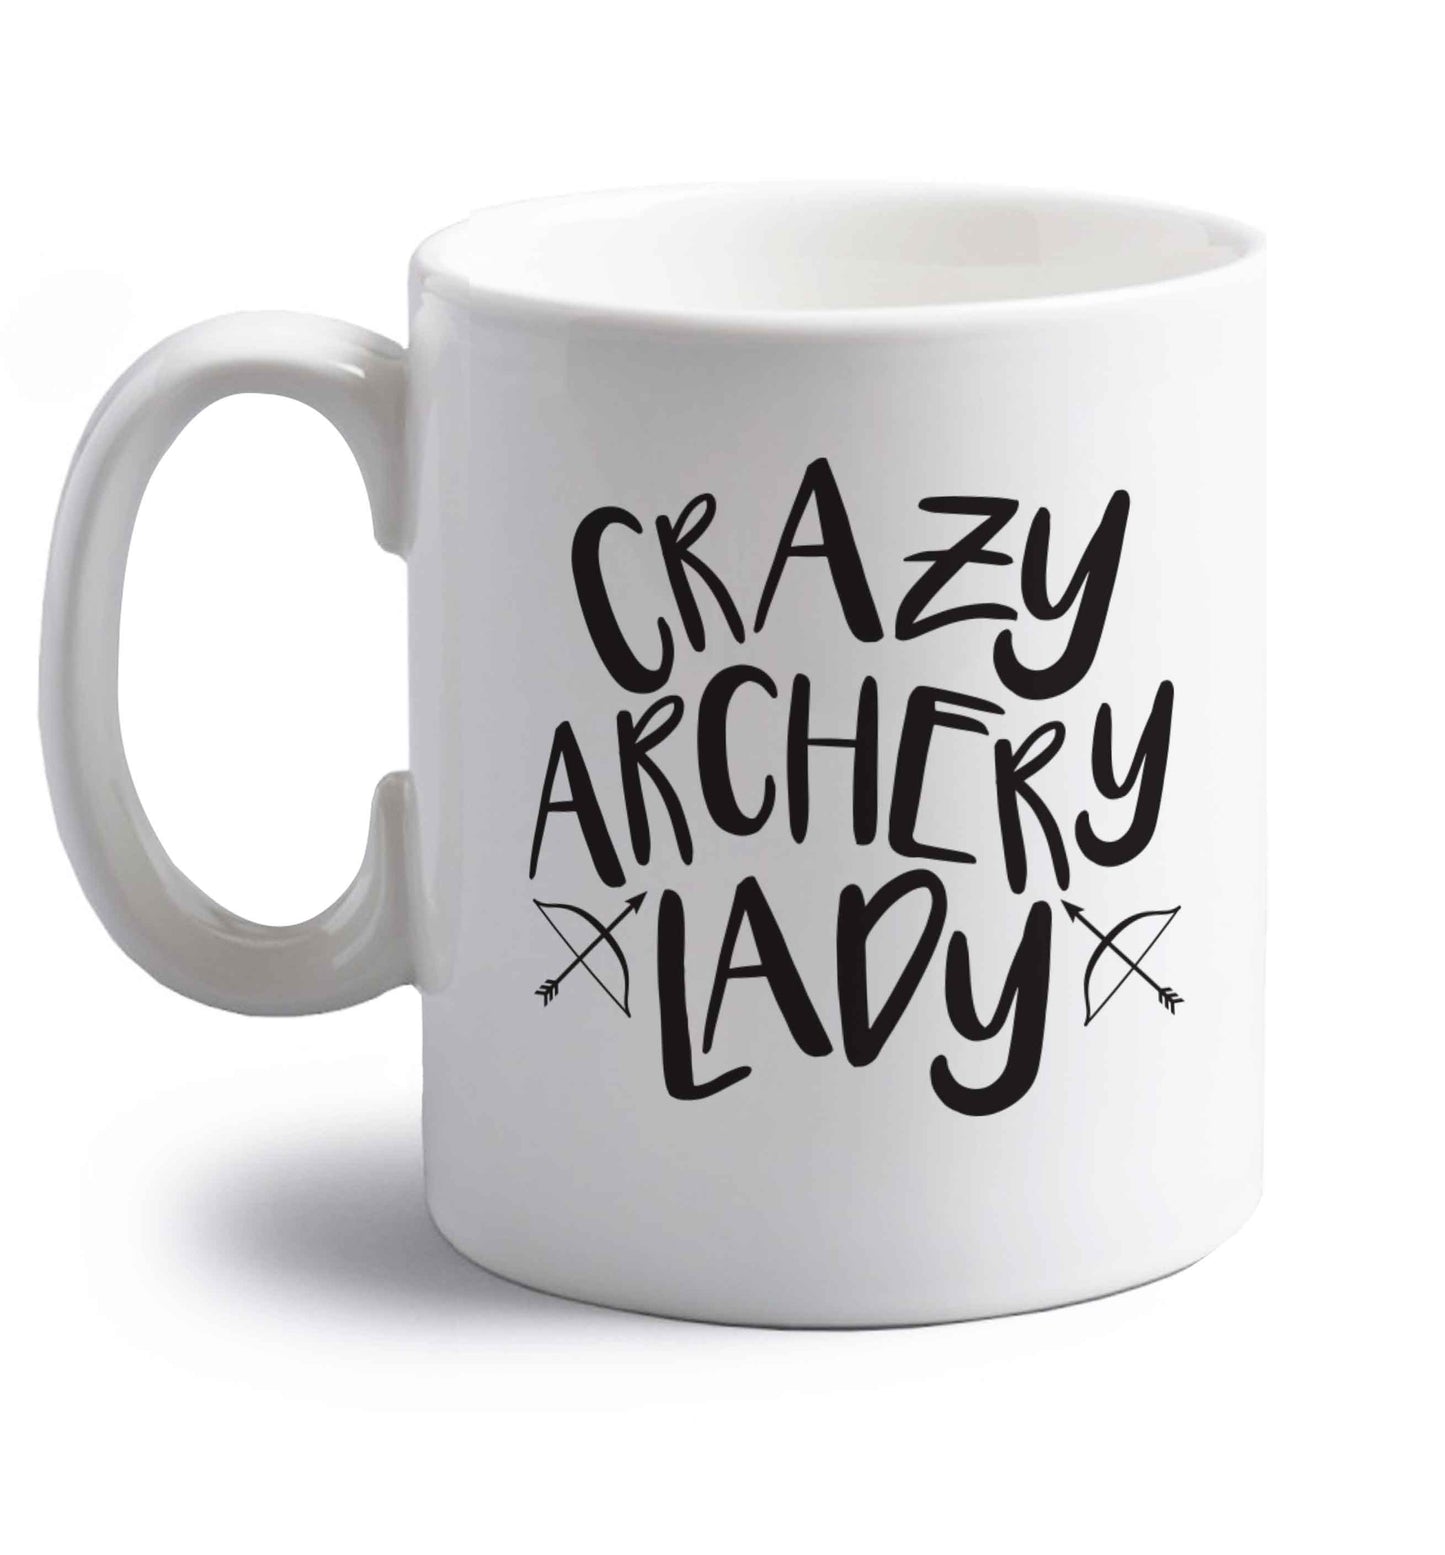 Crazy archery lady right handed white ceramic mug 